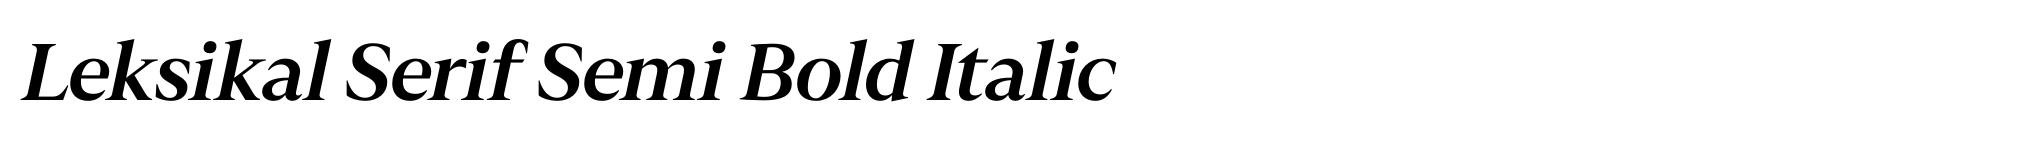 Leksikal Serif Semi Bold Italic image